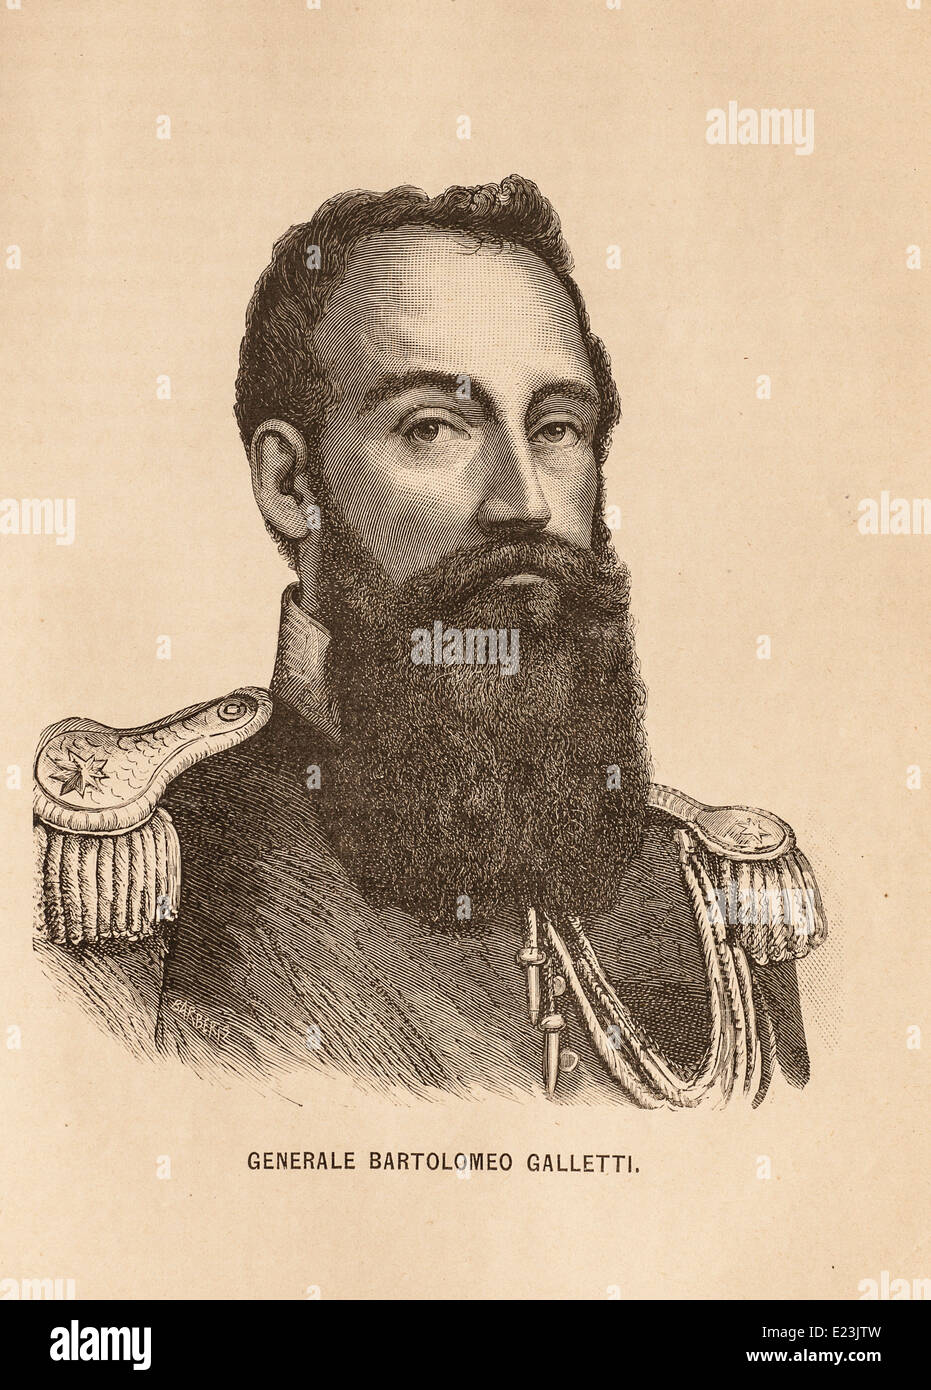 Giuseppe Mazzini desde el libro de Jessie W. Mario de vida de Mazzini. Retrato del General Bartolomeo Galletti Foto de stock